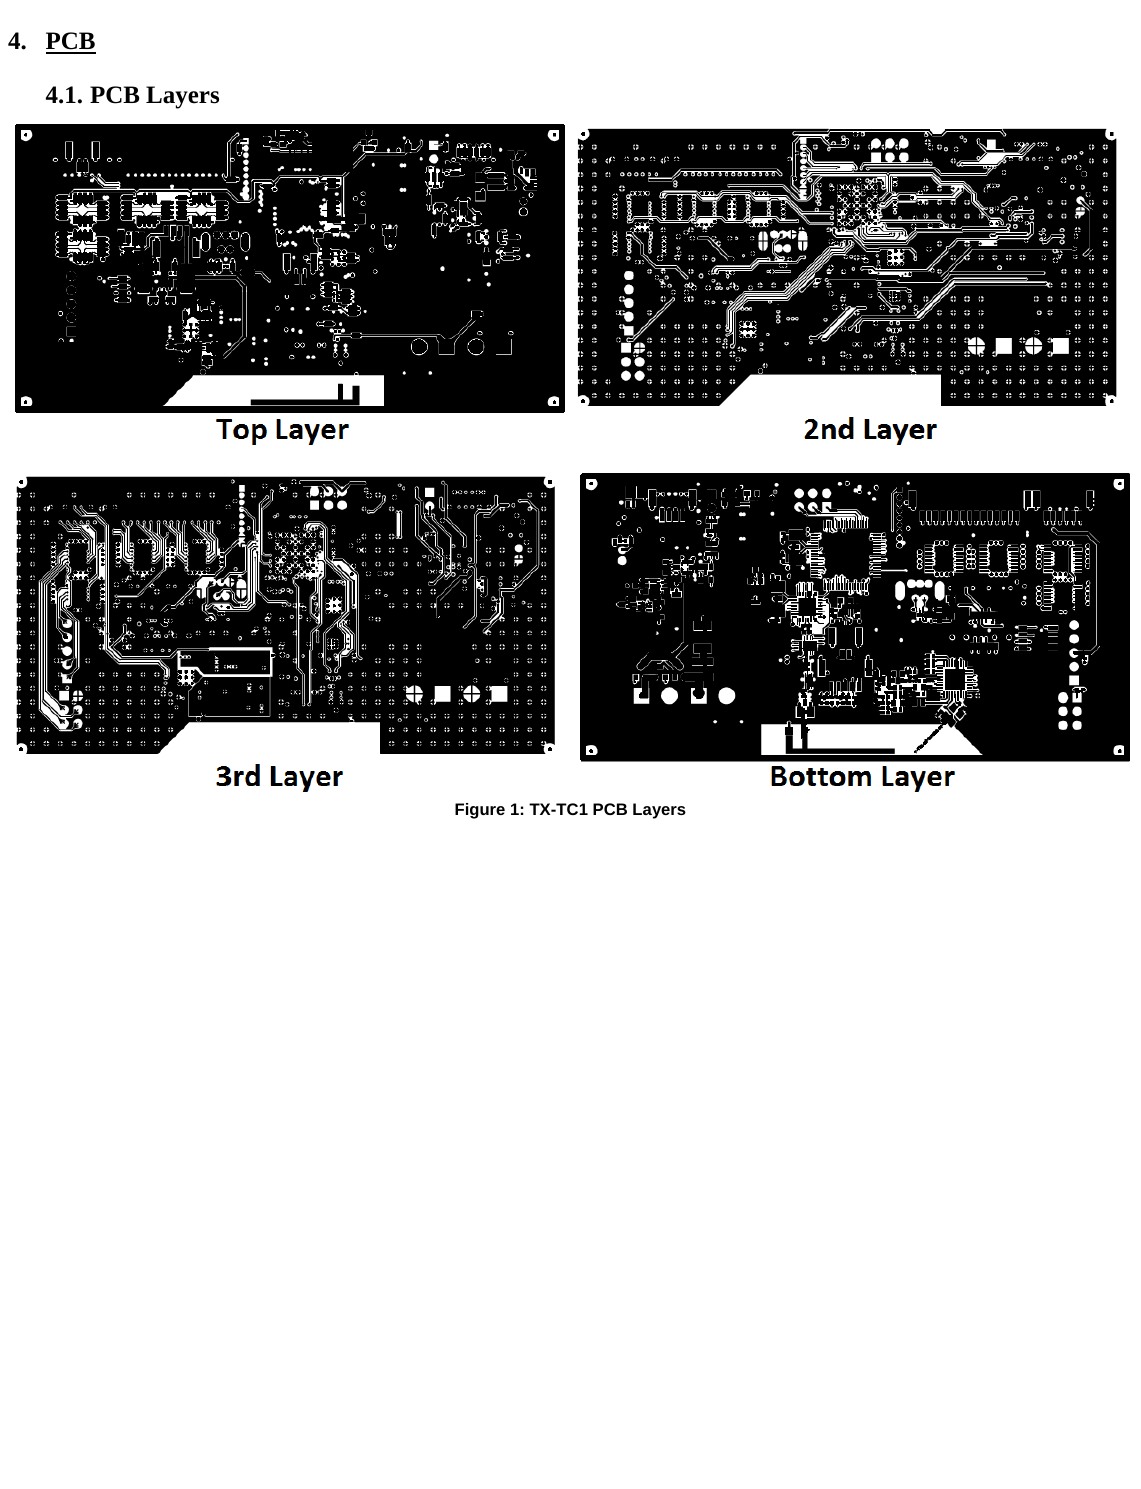   4. PCB 4.1. PCB Layers  Figure 1: TX-TC1 PCB Layers                       